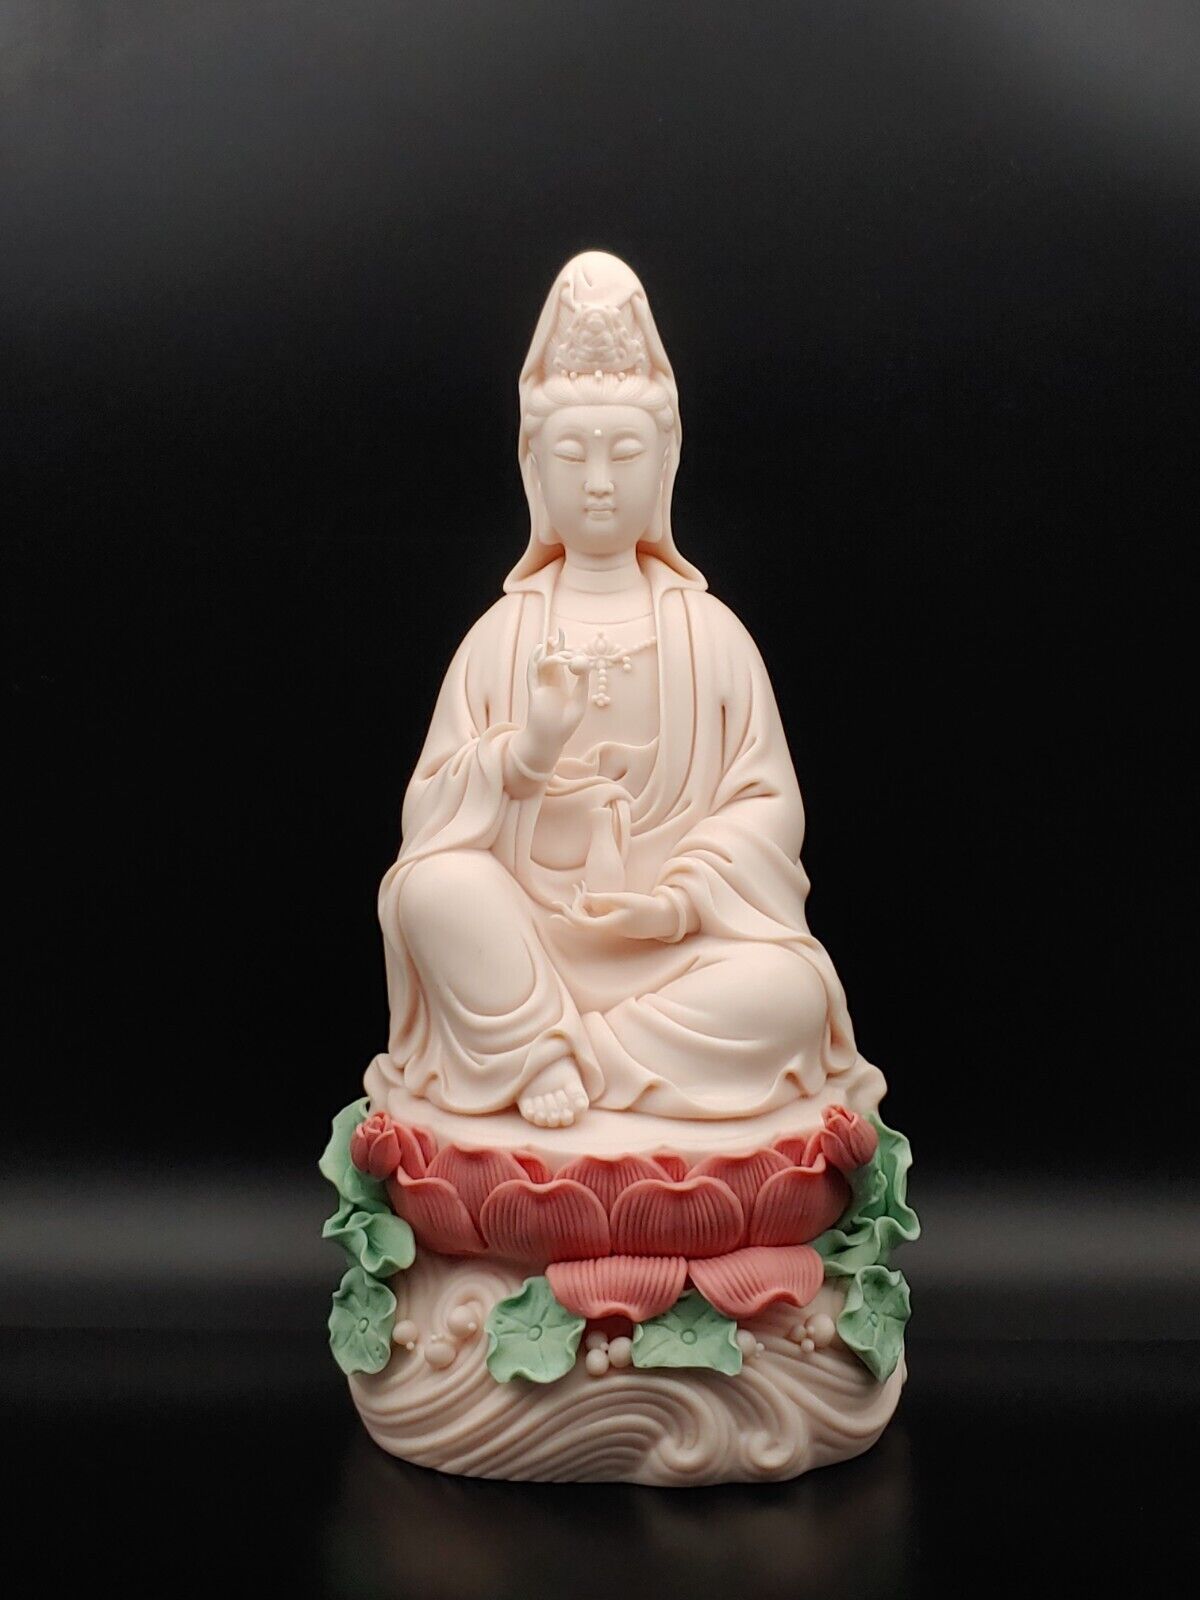 德化白瓷加彩瓷塑 苏杜村大师 观音菩萨坐像 Chinese Master Dehua White Porcelain Guanyin Figure Statue